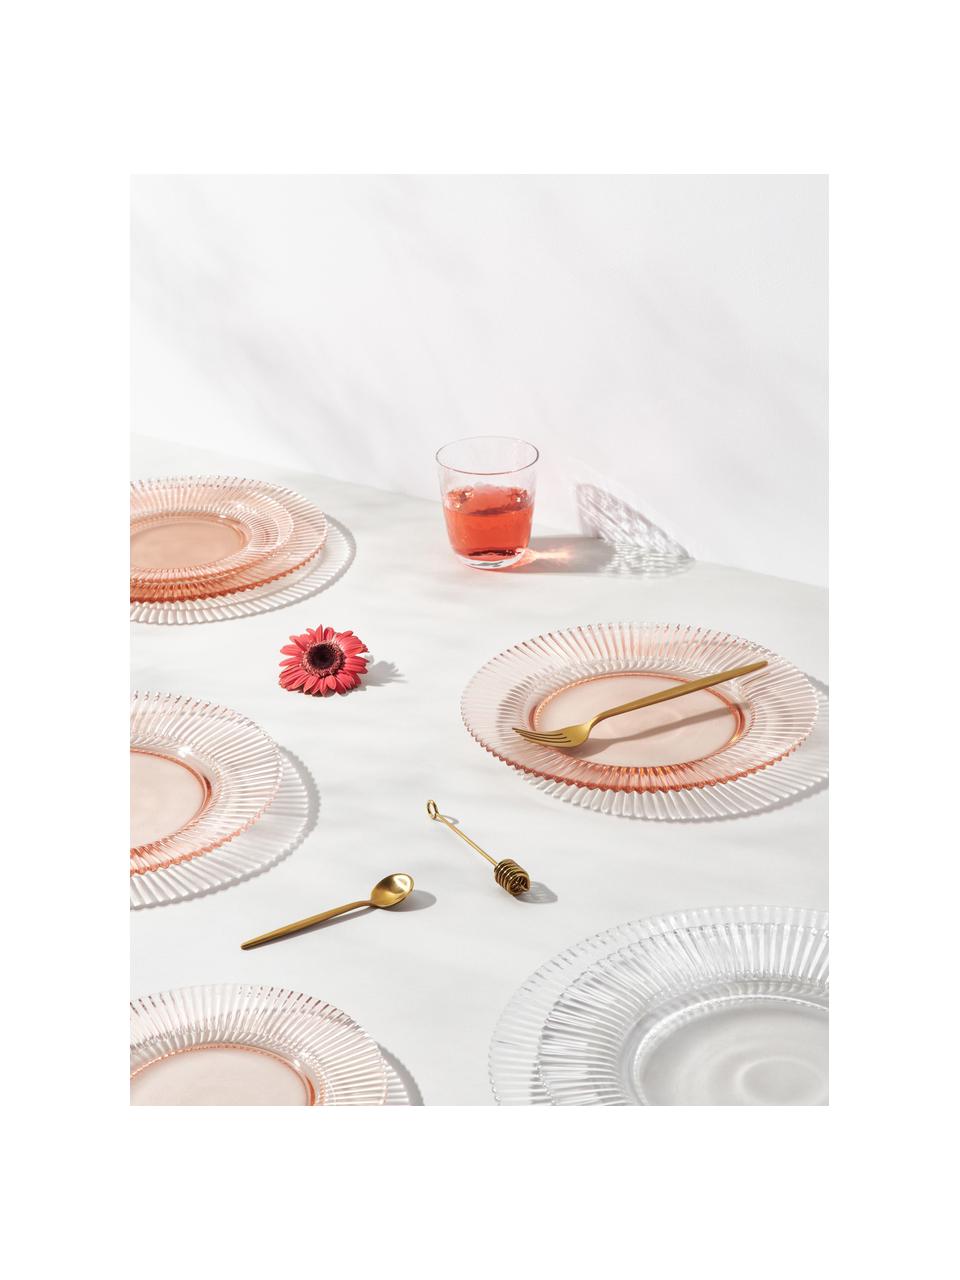 Ontbijtbord Effie met groefreliëf, 4 stuks, Glas, Transparant, Ø 21 cm